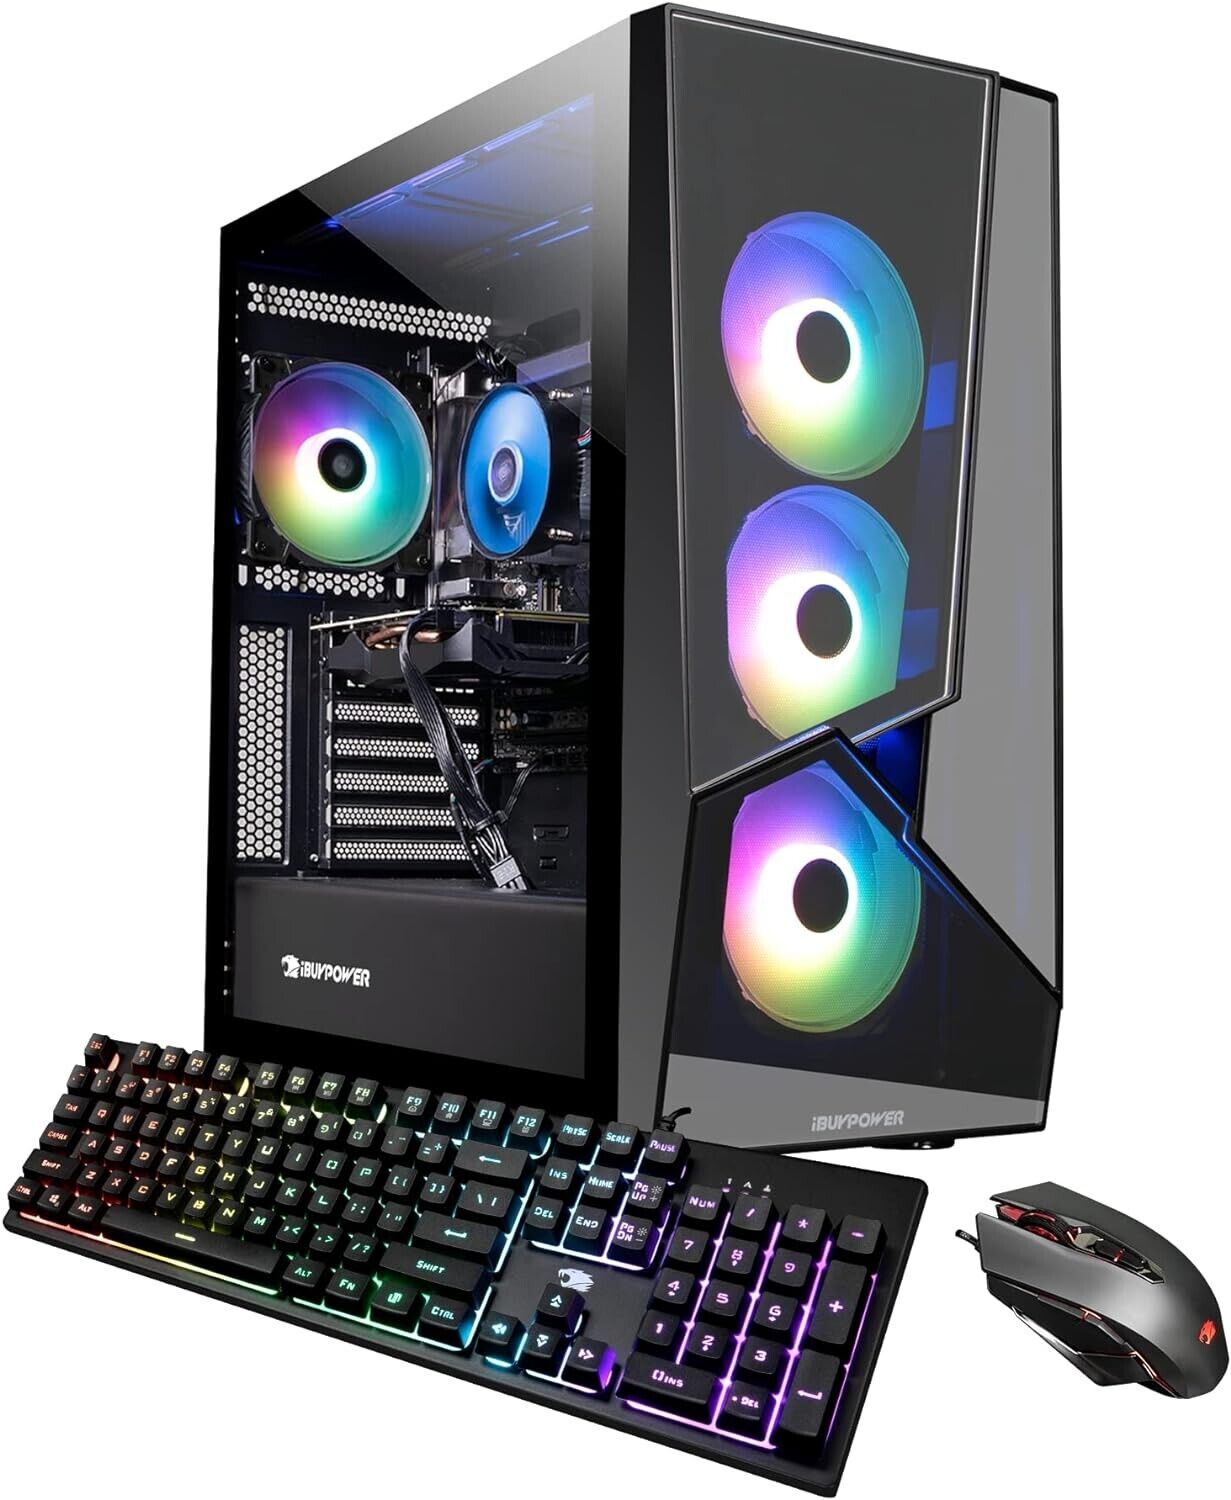 iBUYPOWER Pro Gaming PC Computer Desktop Slate5MR 254i (AMD Ryzen 3 3100 3.6 GHz